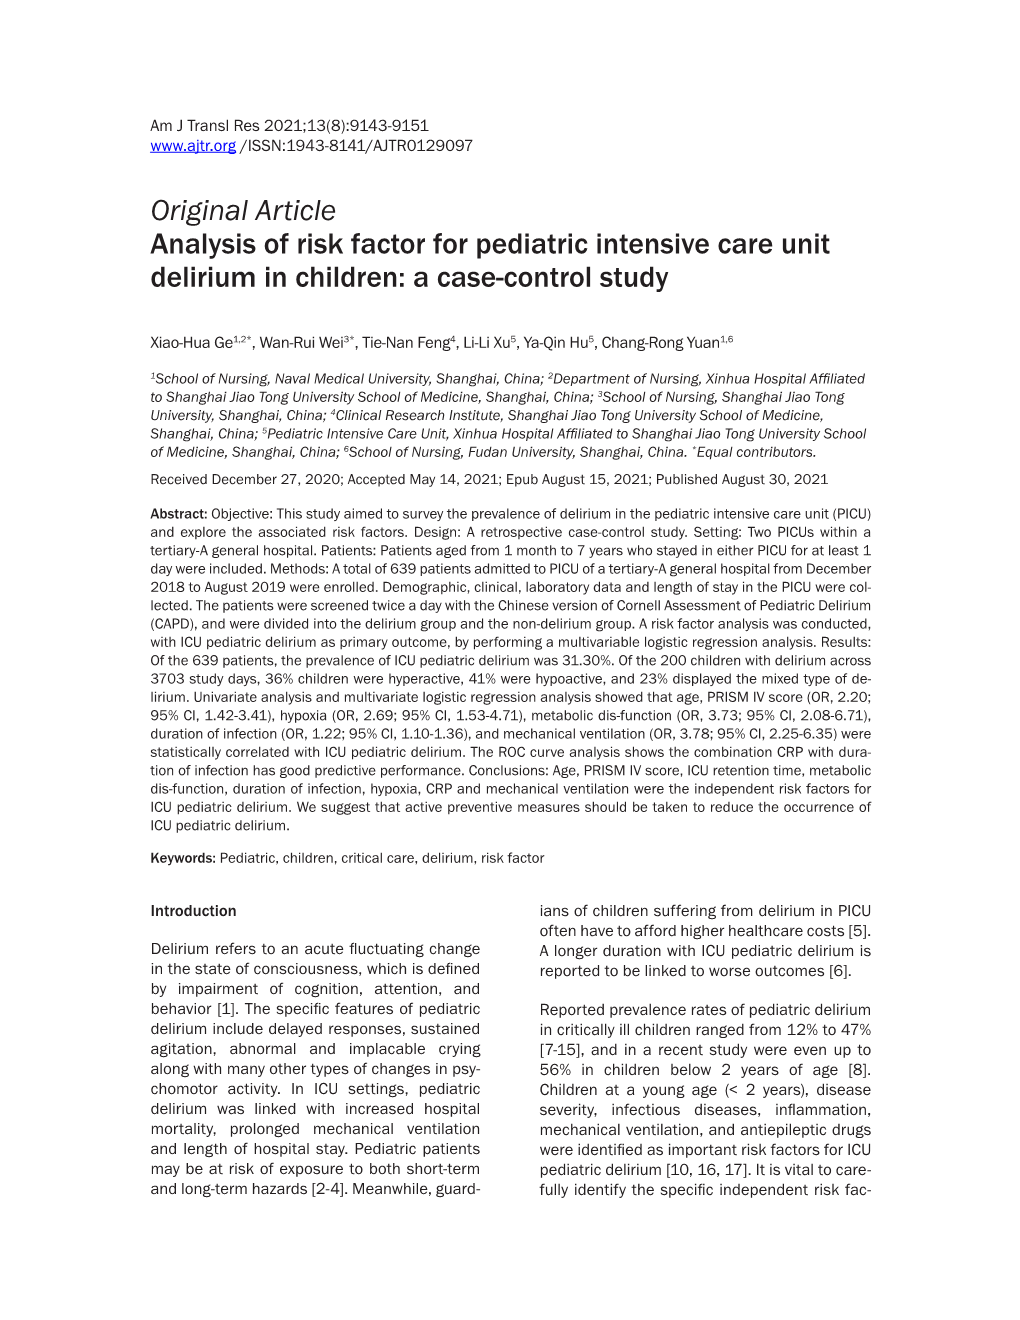 Original Article Analysis of Risk Factor for Pediatric Intensive Care Unit Delirium in Children: a Case-Control Study